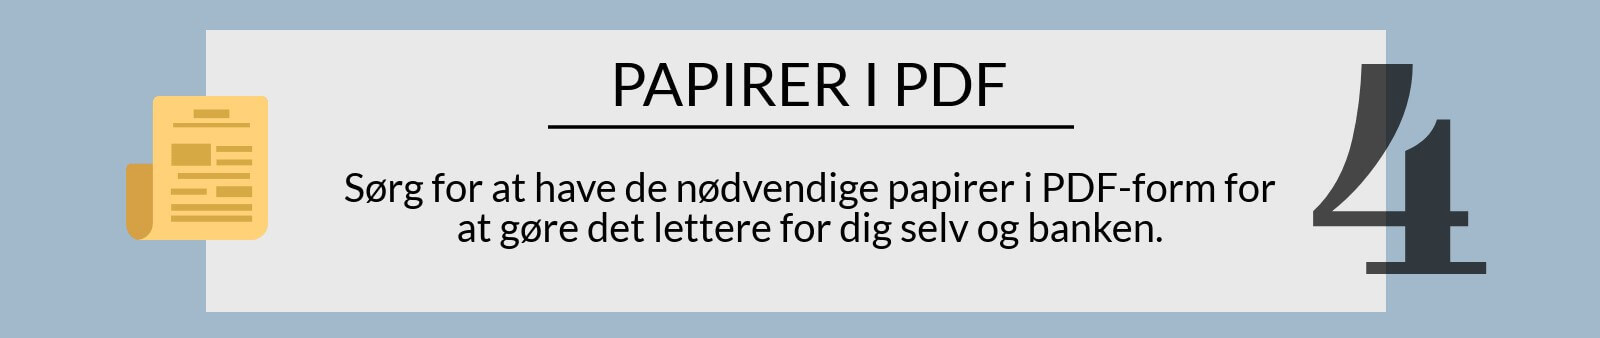 Papirer i PDF